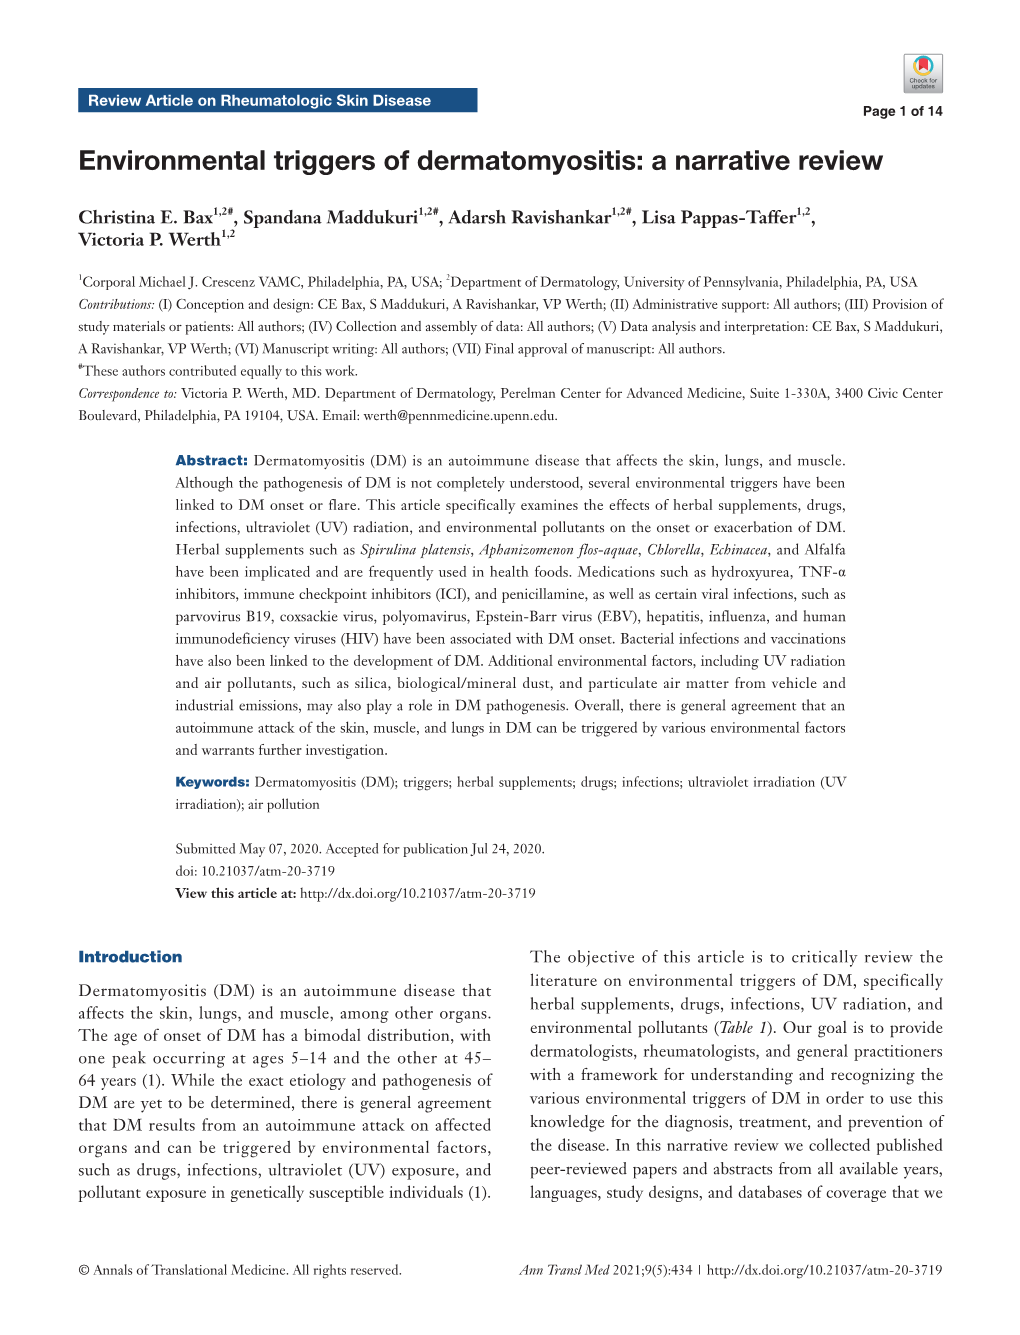 Environmental Triggers of Dermatomyositis: a Narrative Review